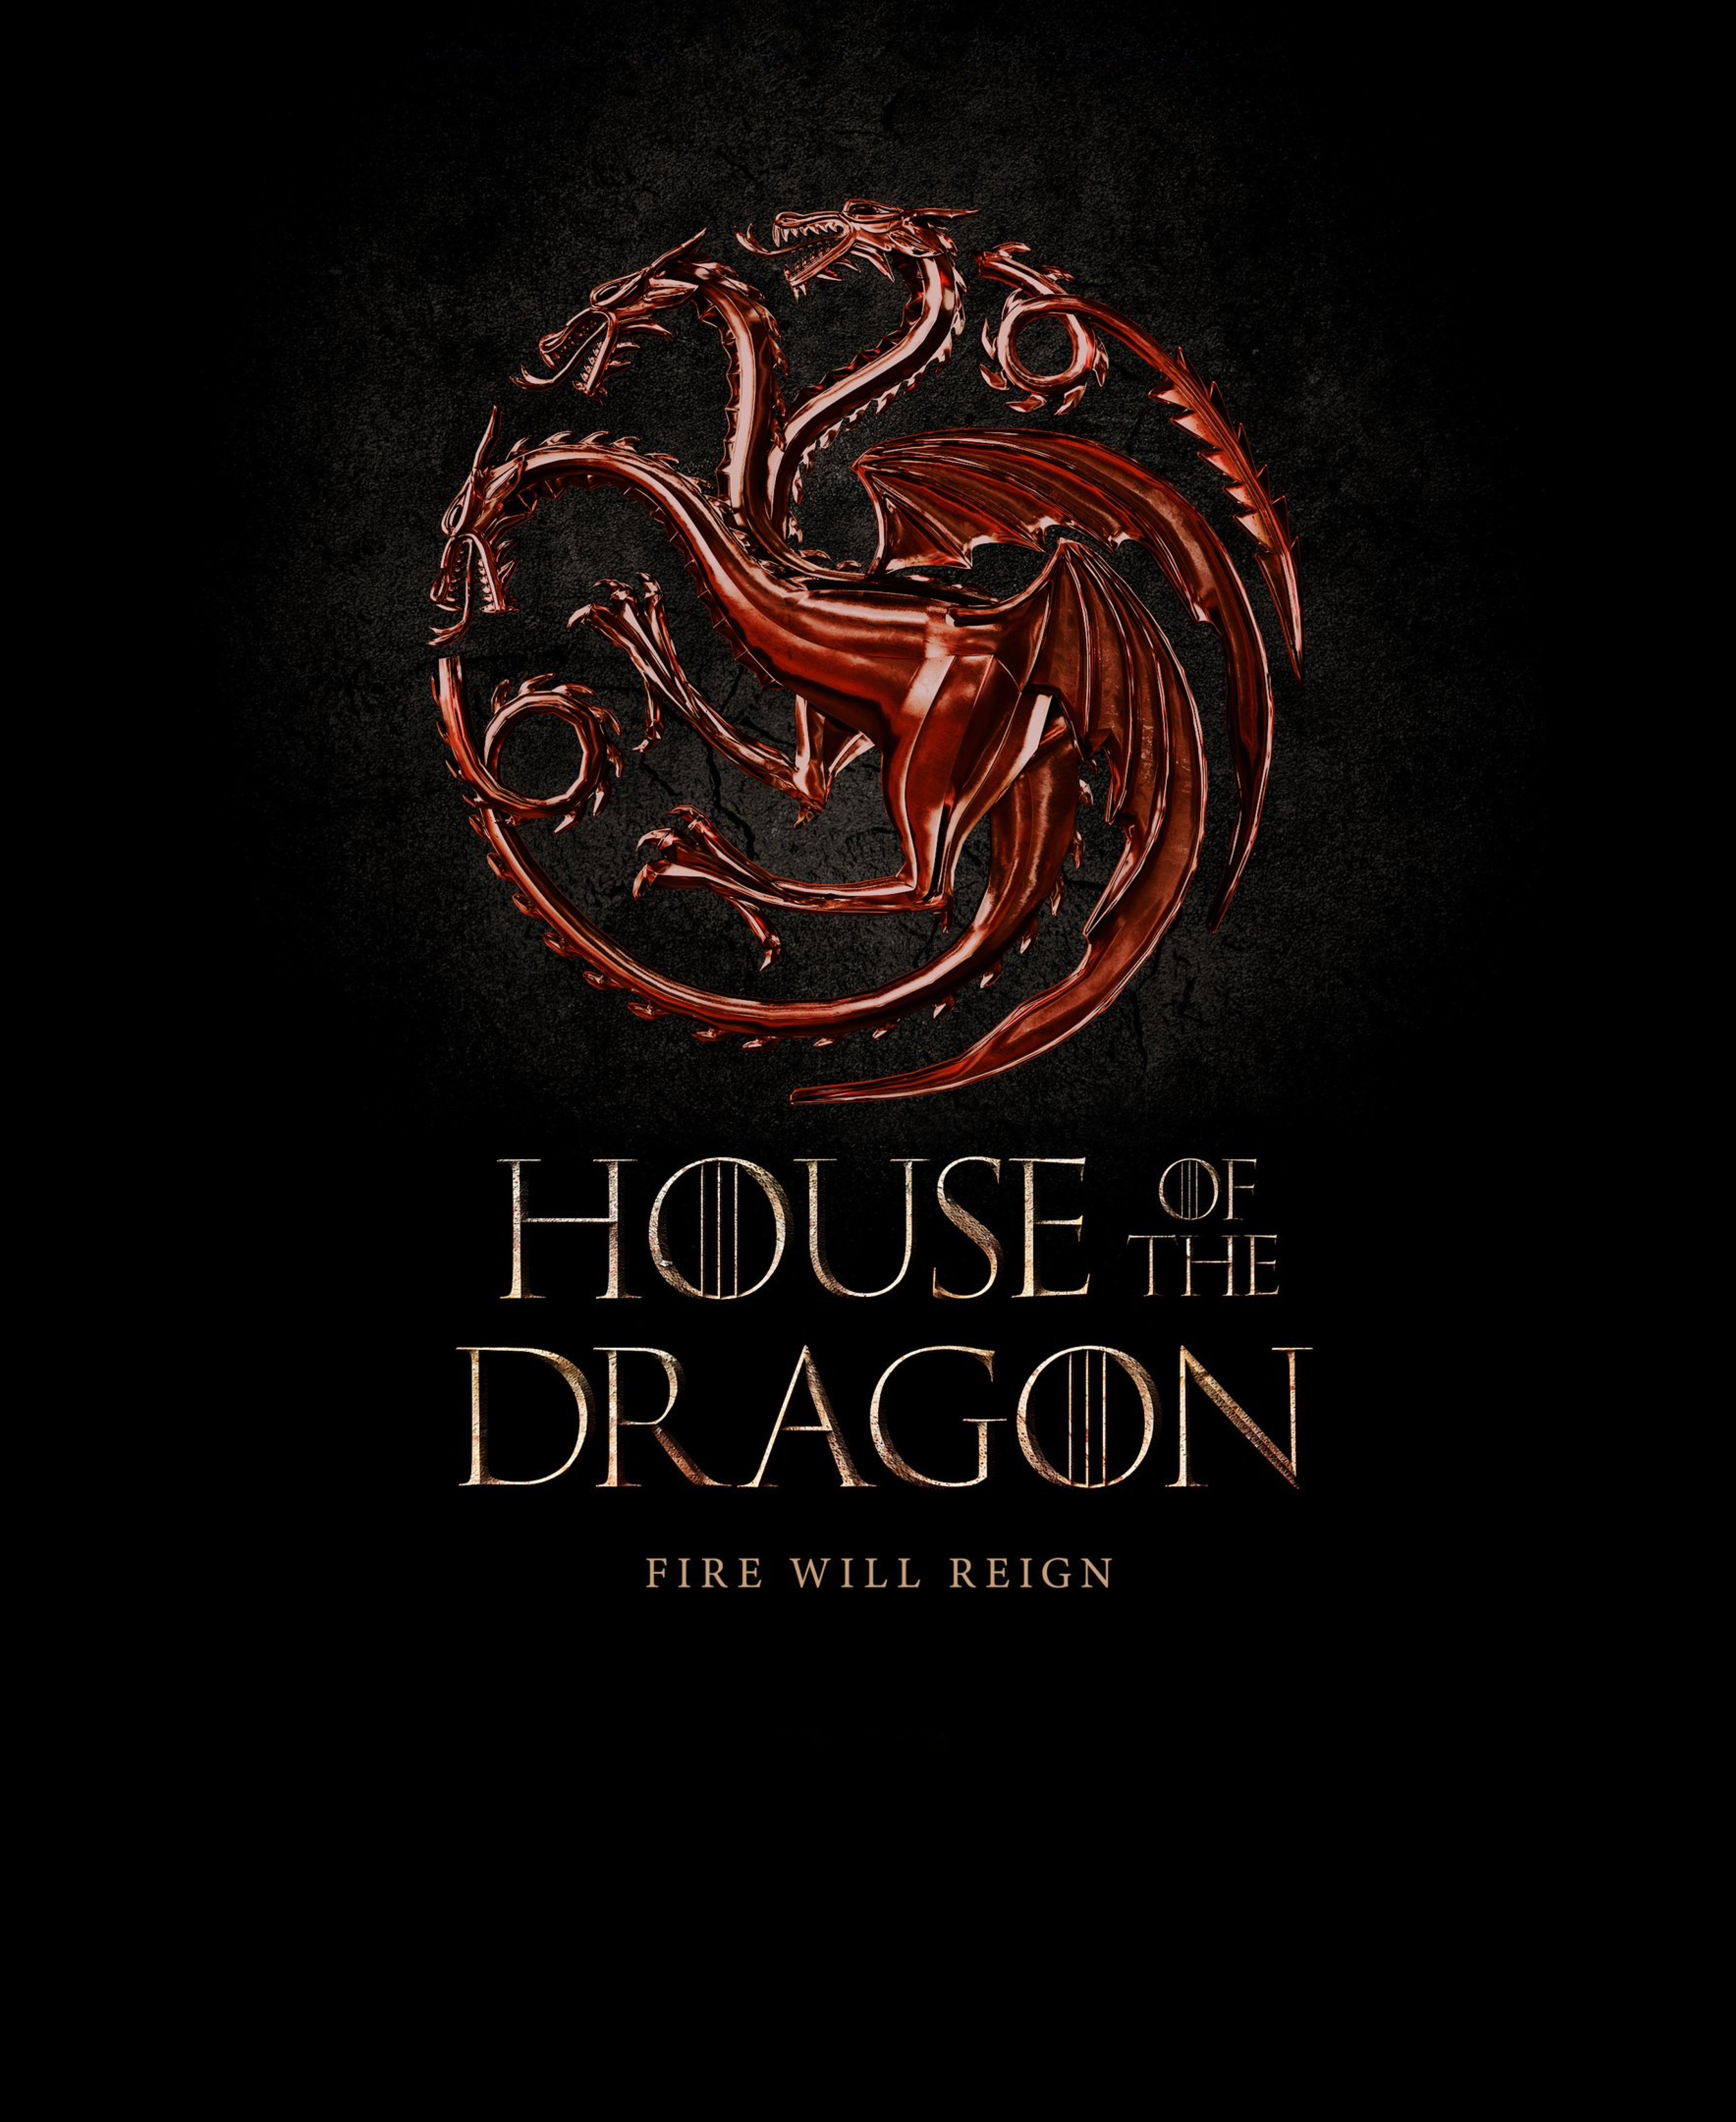 House of the dragon reddit